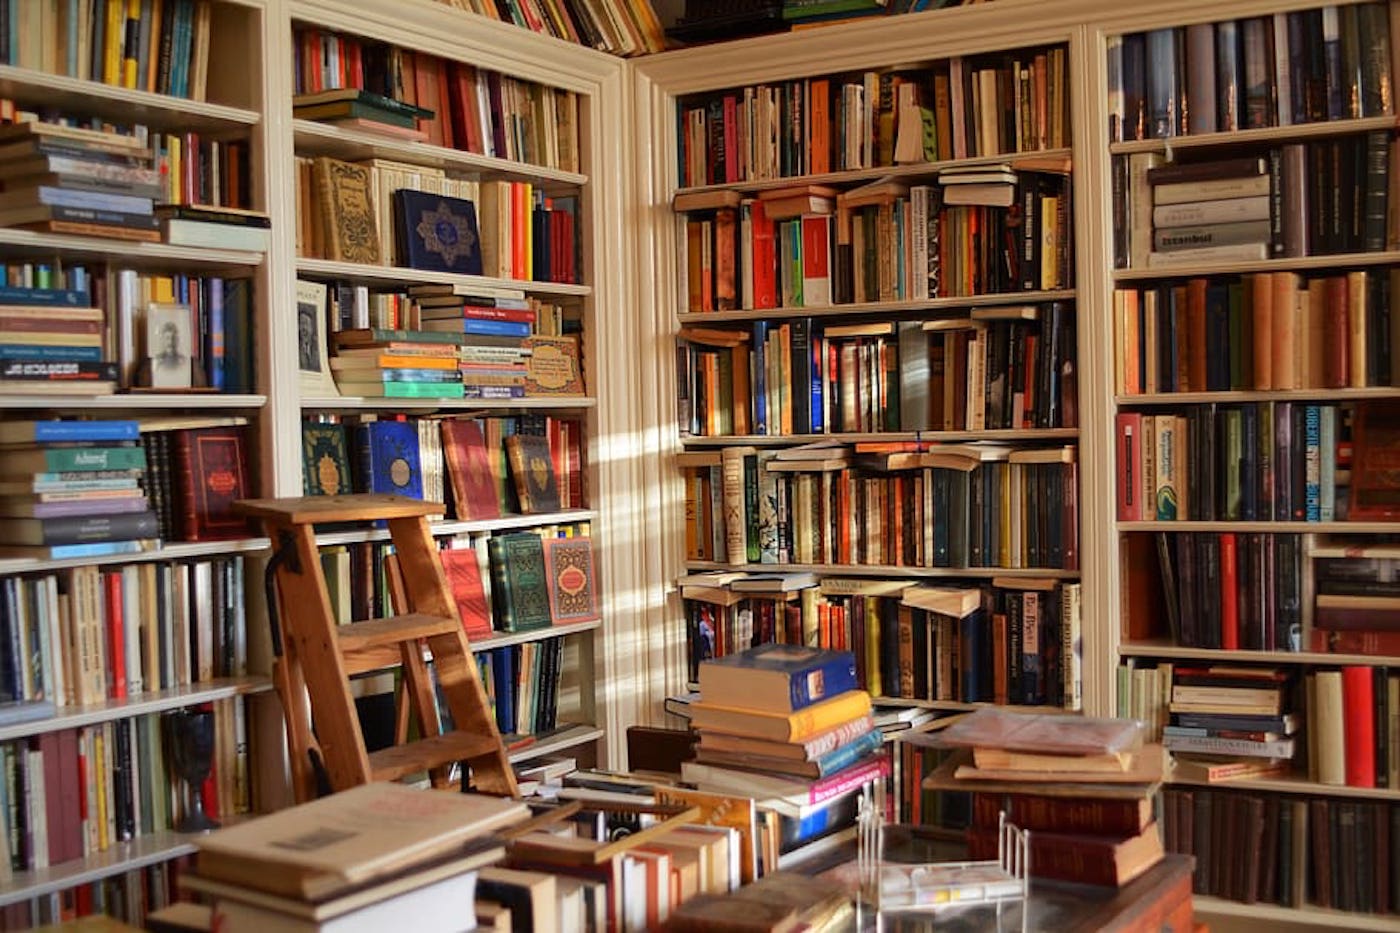 The Bookshelf: A Reader’s Discrimination